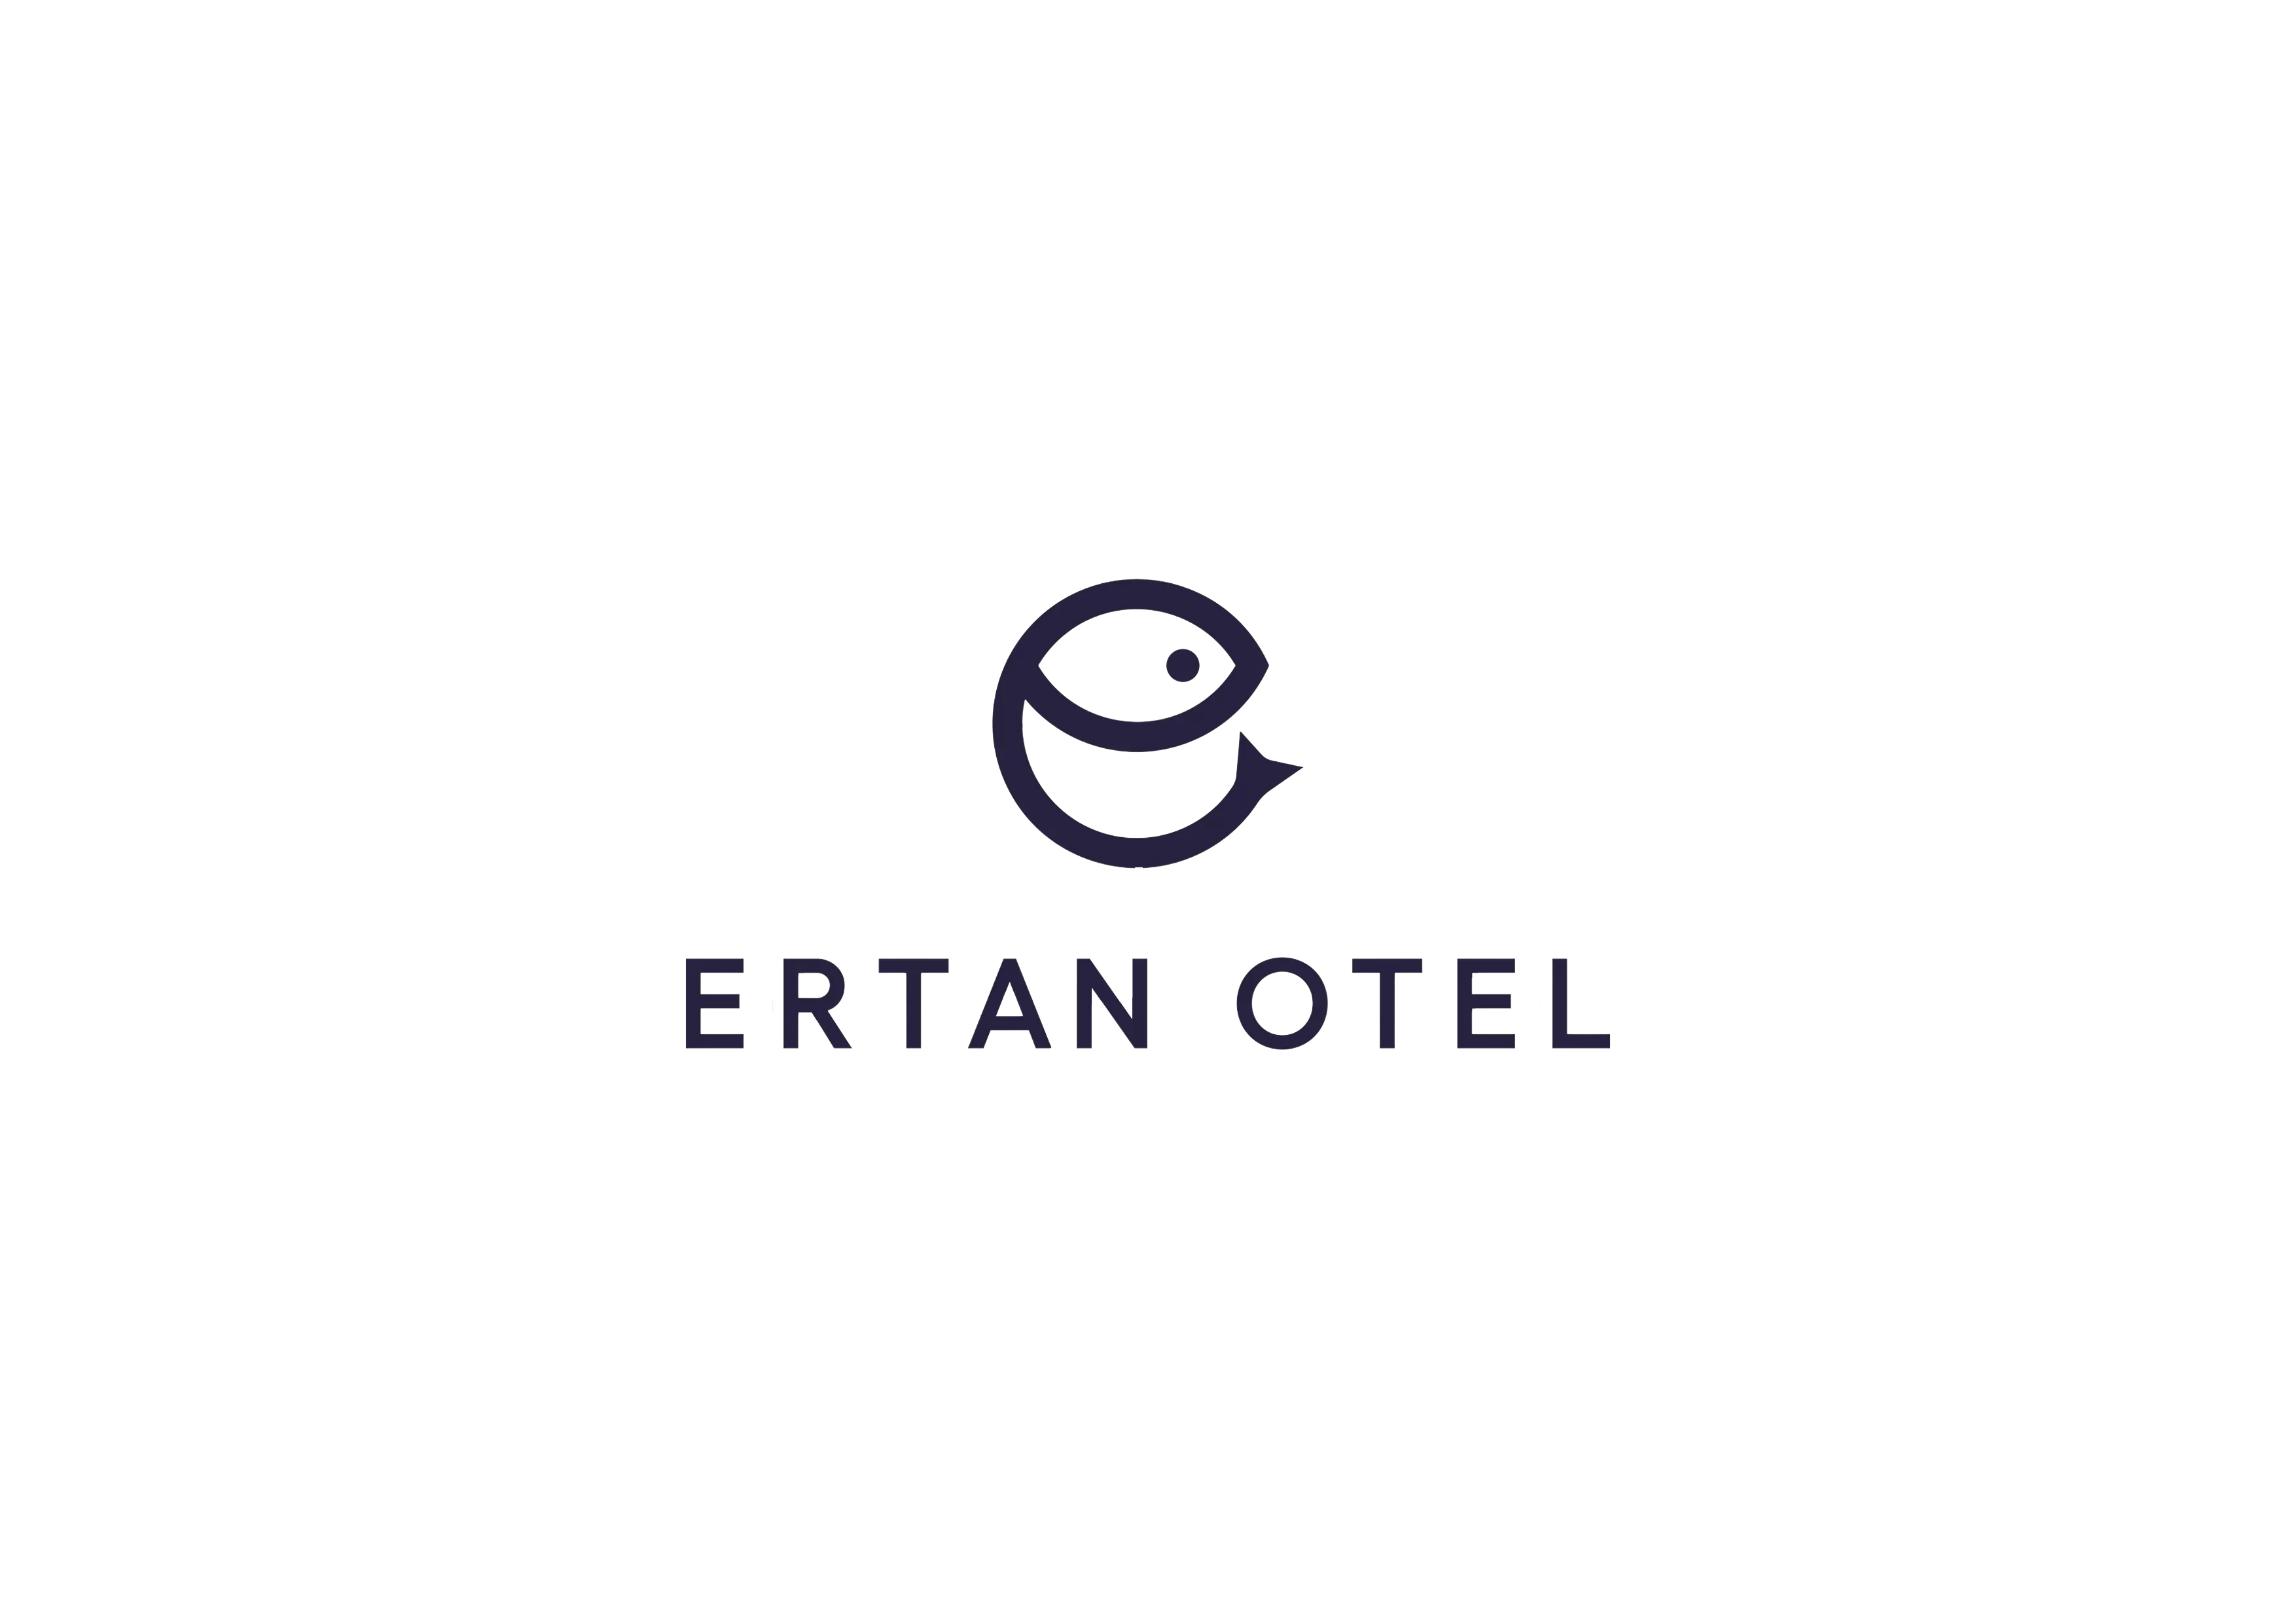 ERTAN HOTEL